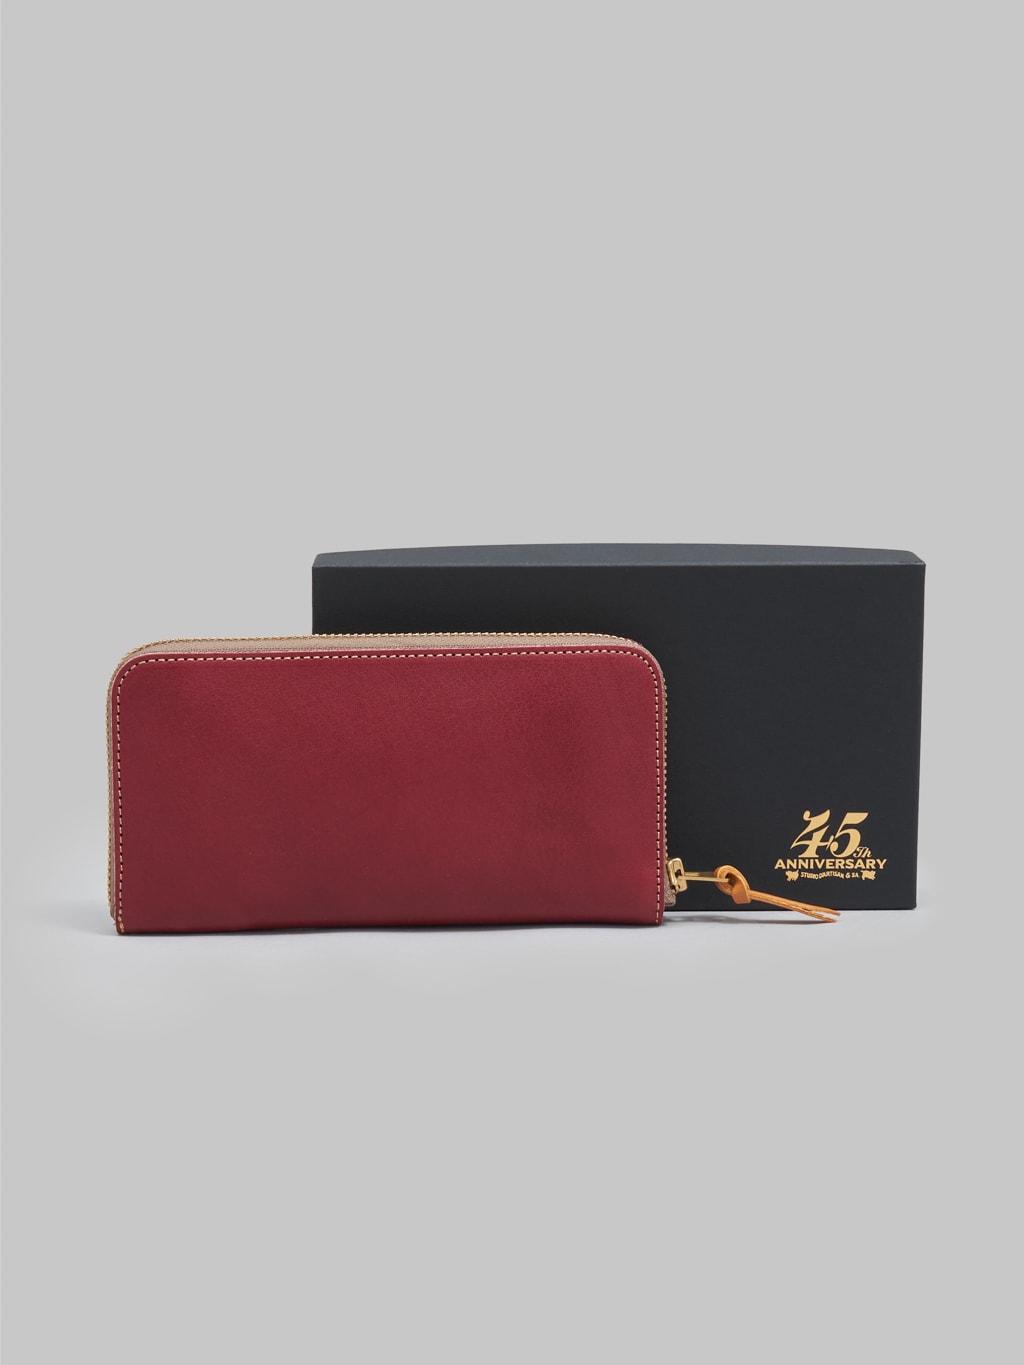 Studio D'Artisan SP-101 45th Anniversary "Hinode"Leather Long Wallet